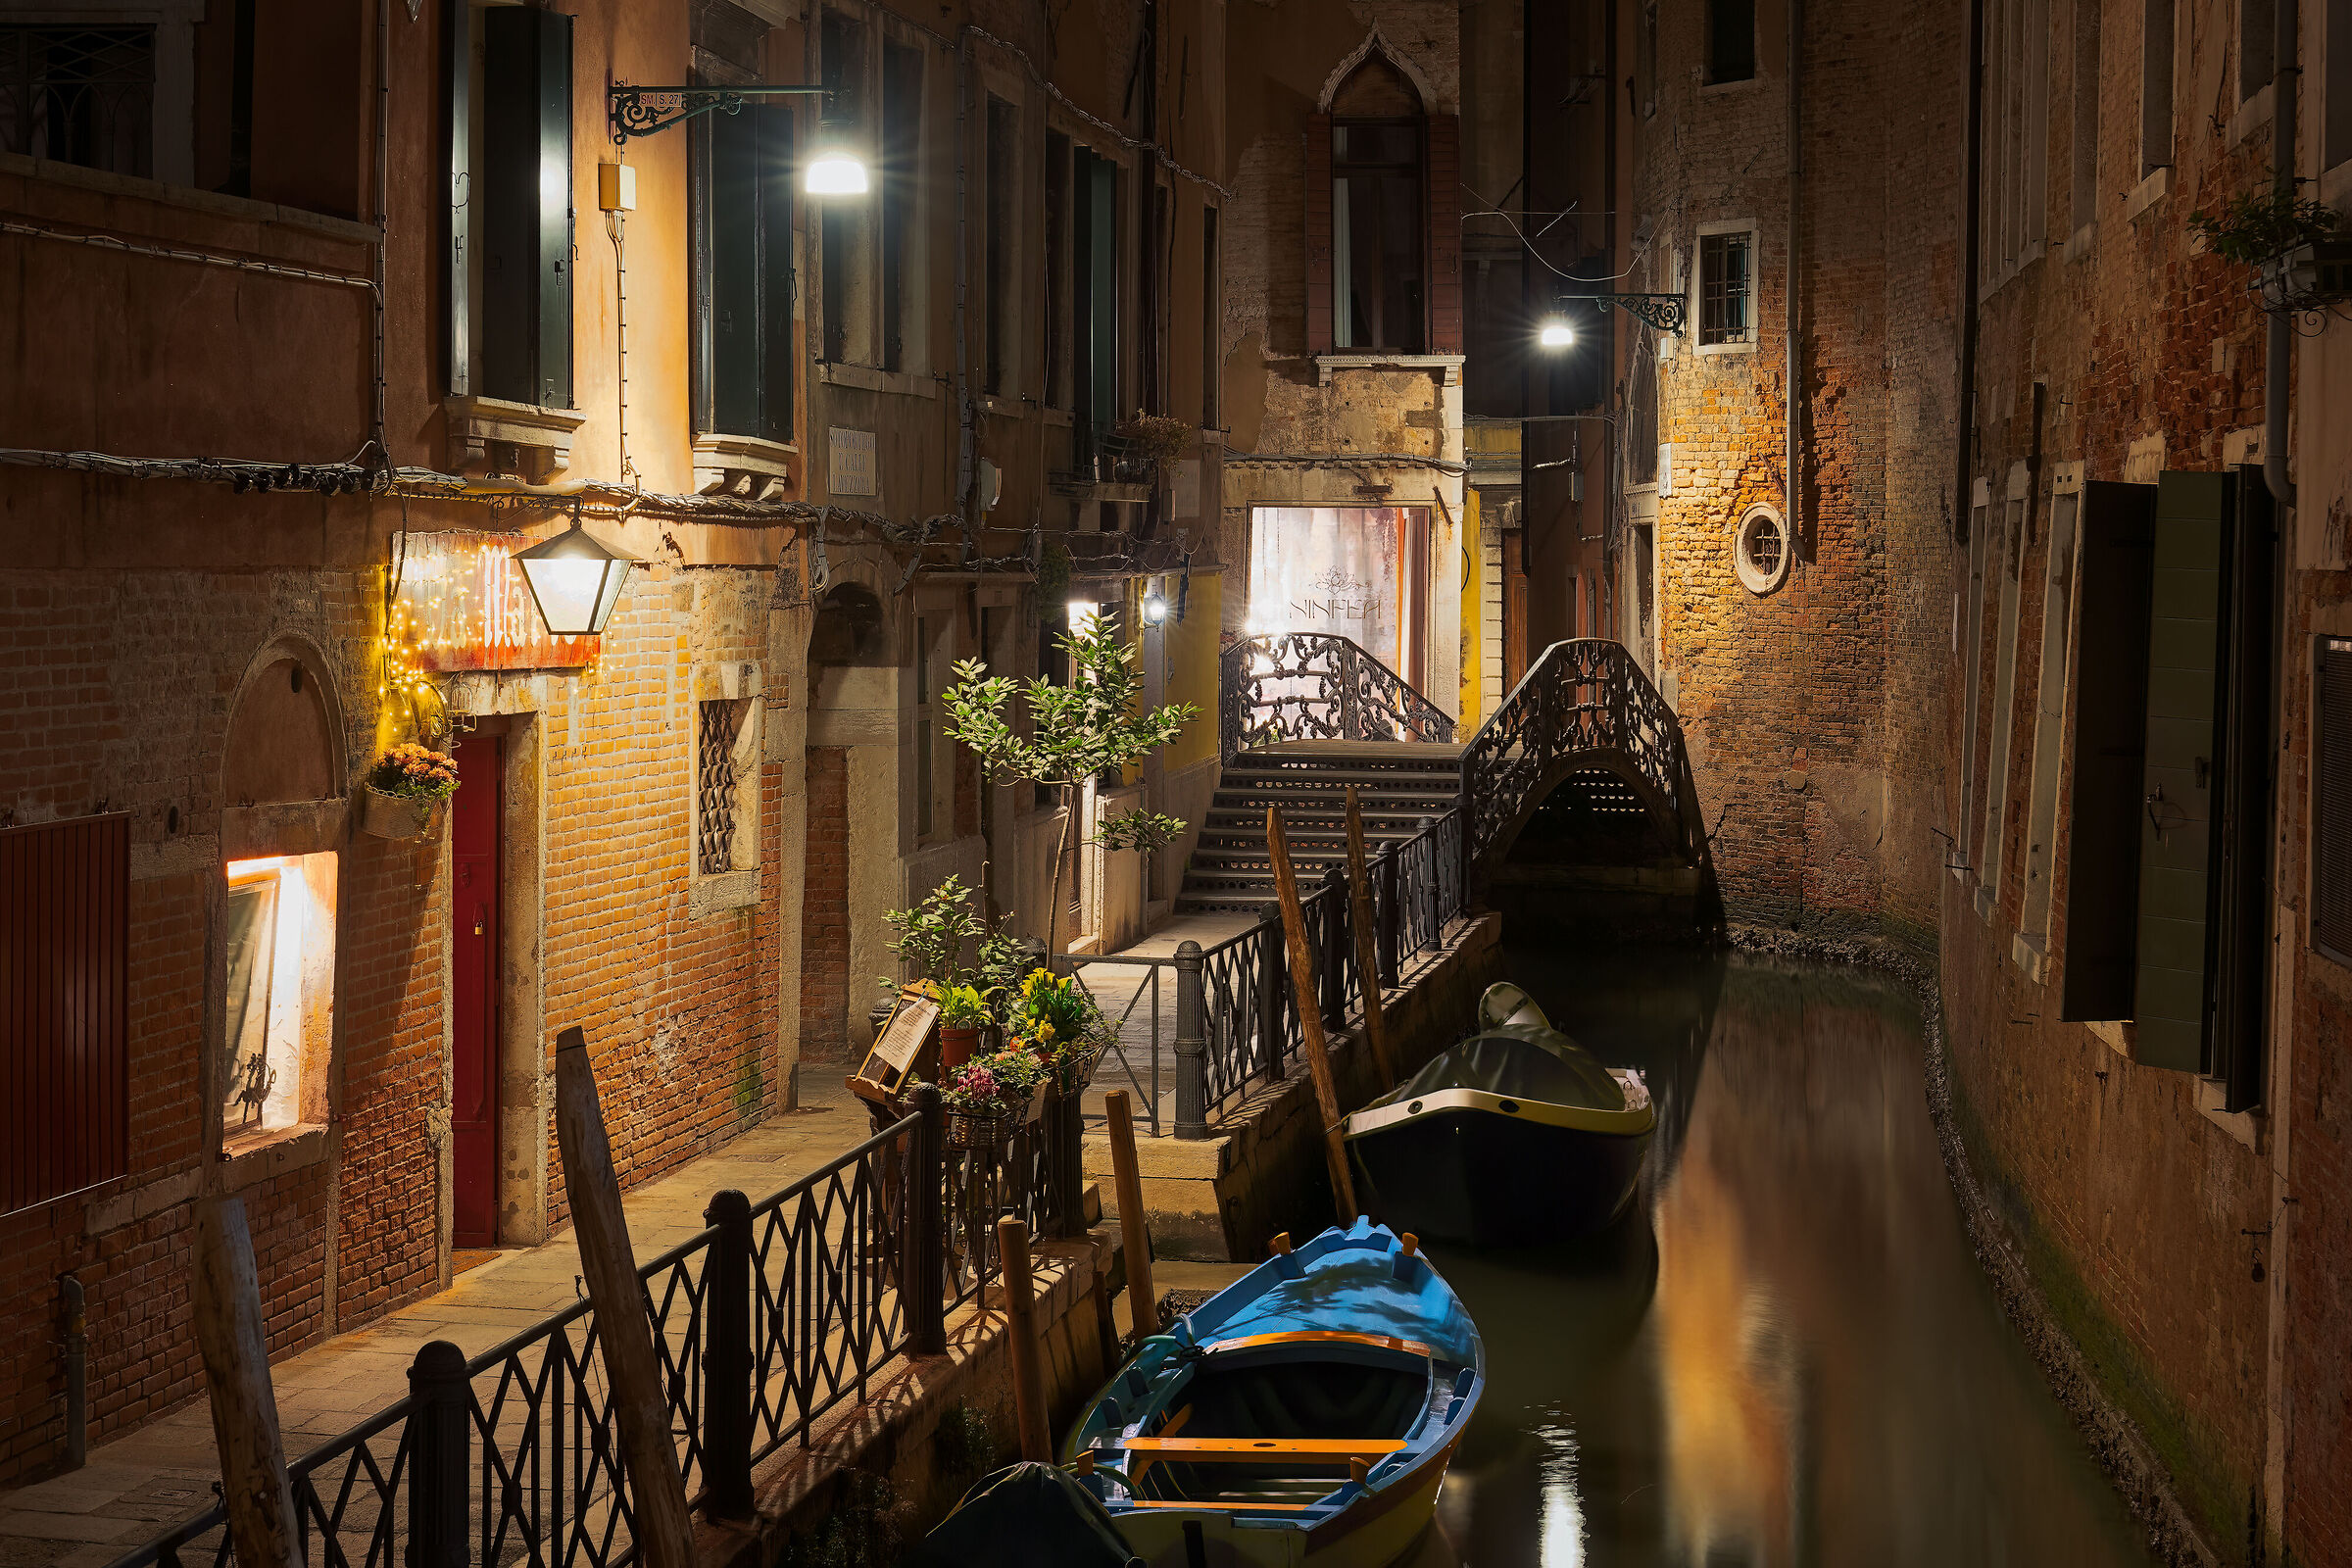 A silent night in Venice...